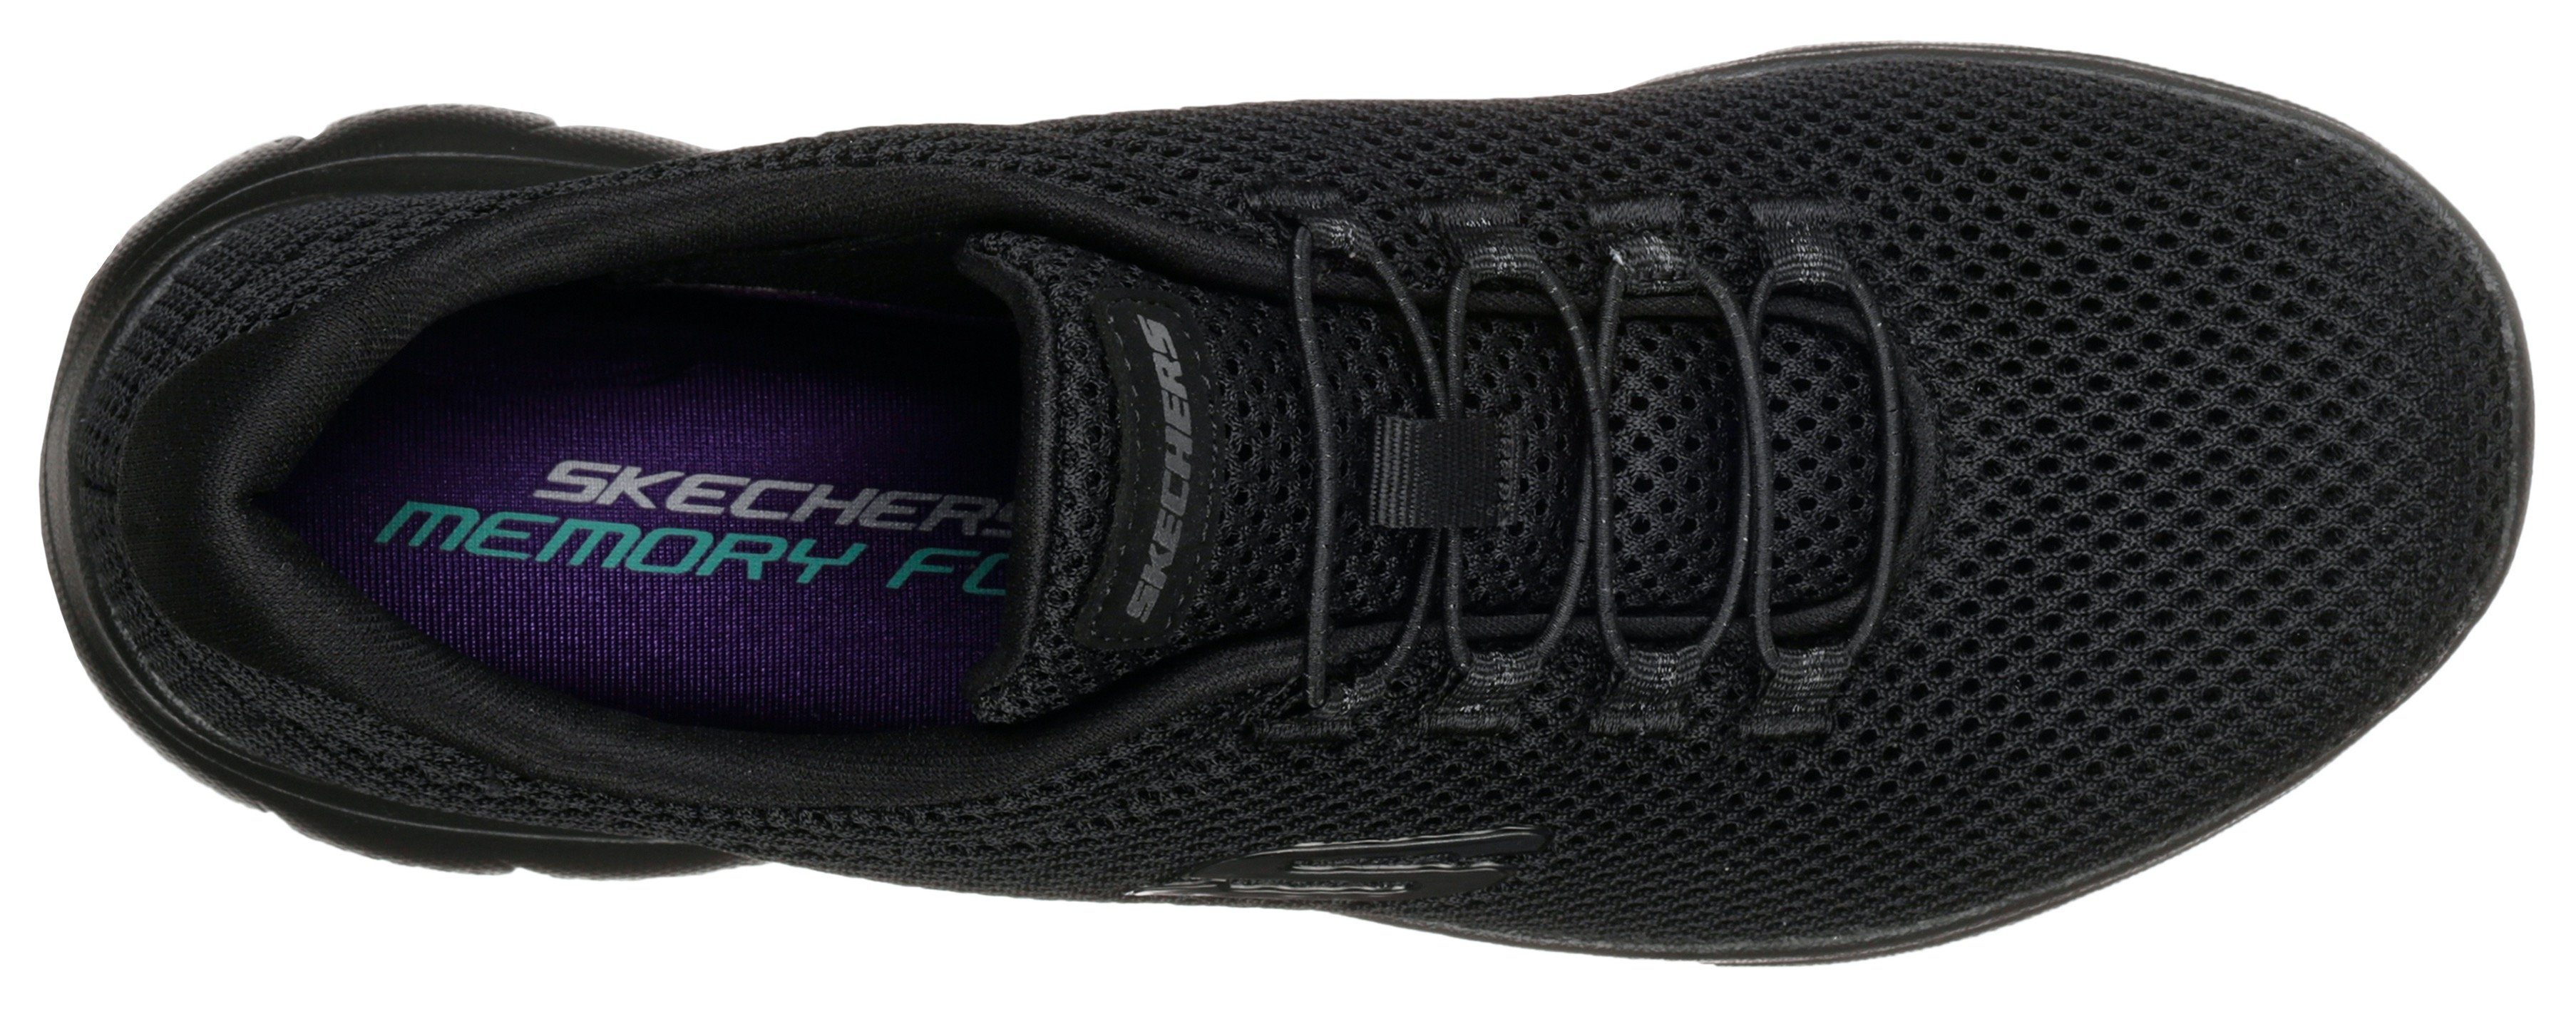 Sneaker schwarz Innensohle Slip-On mit Skechers komfortabler SUMMITS